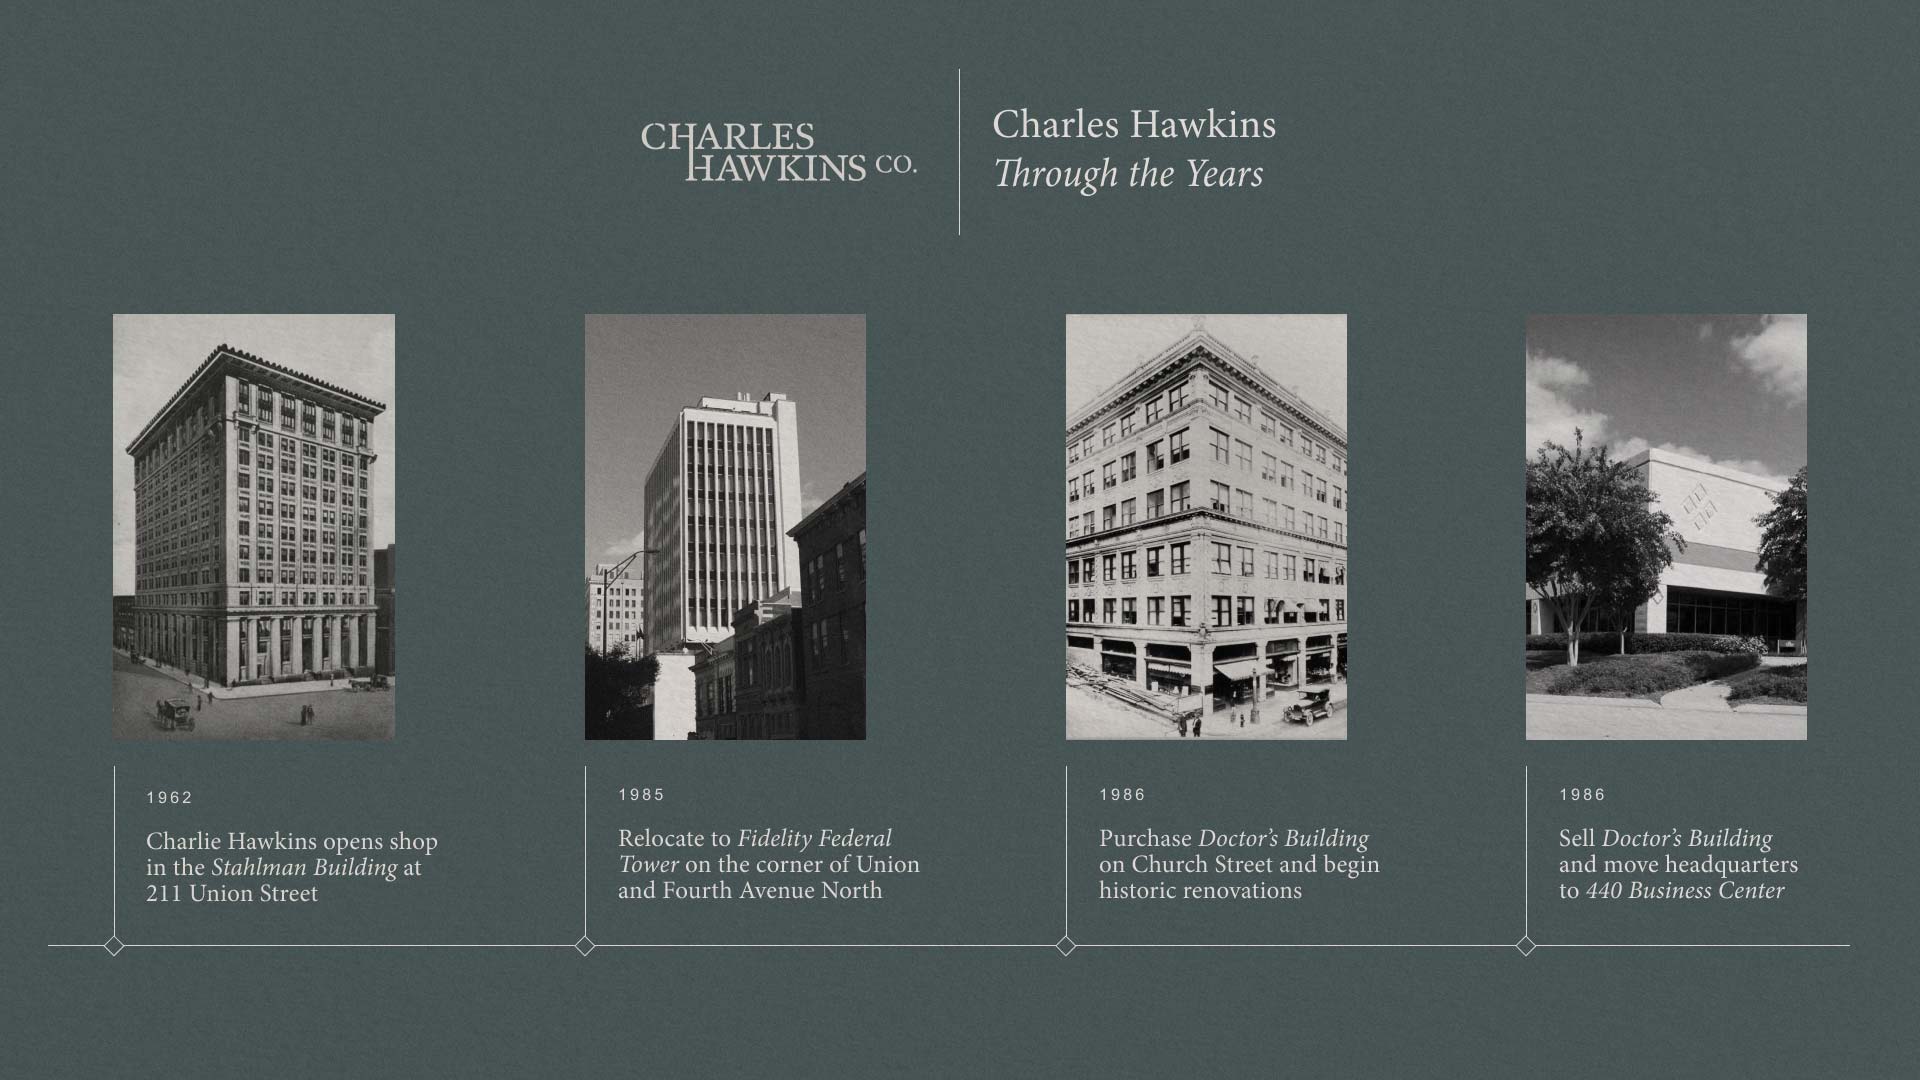 Timeline of company milestones for Charles Hawkins